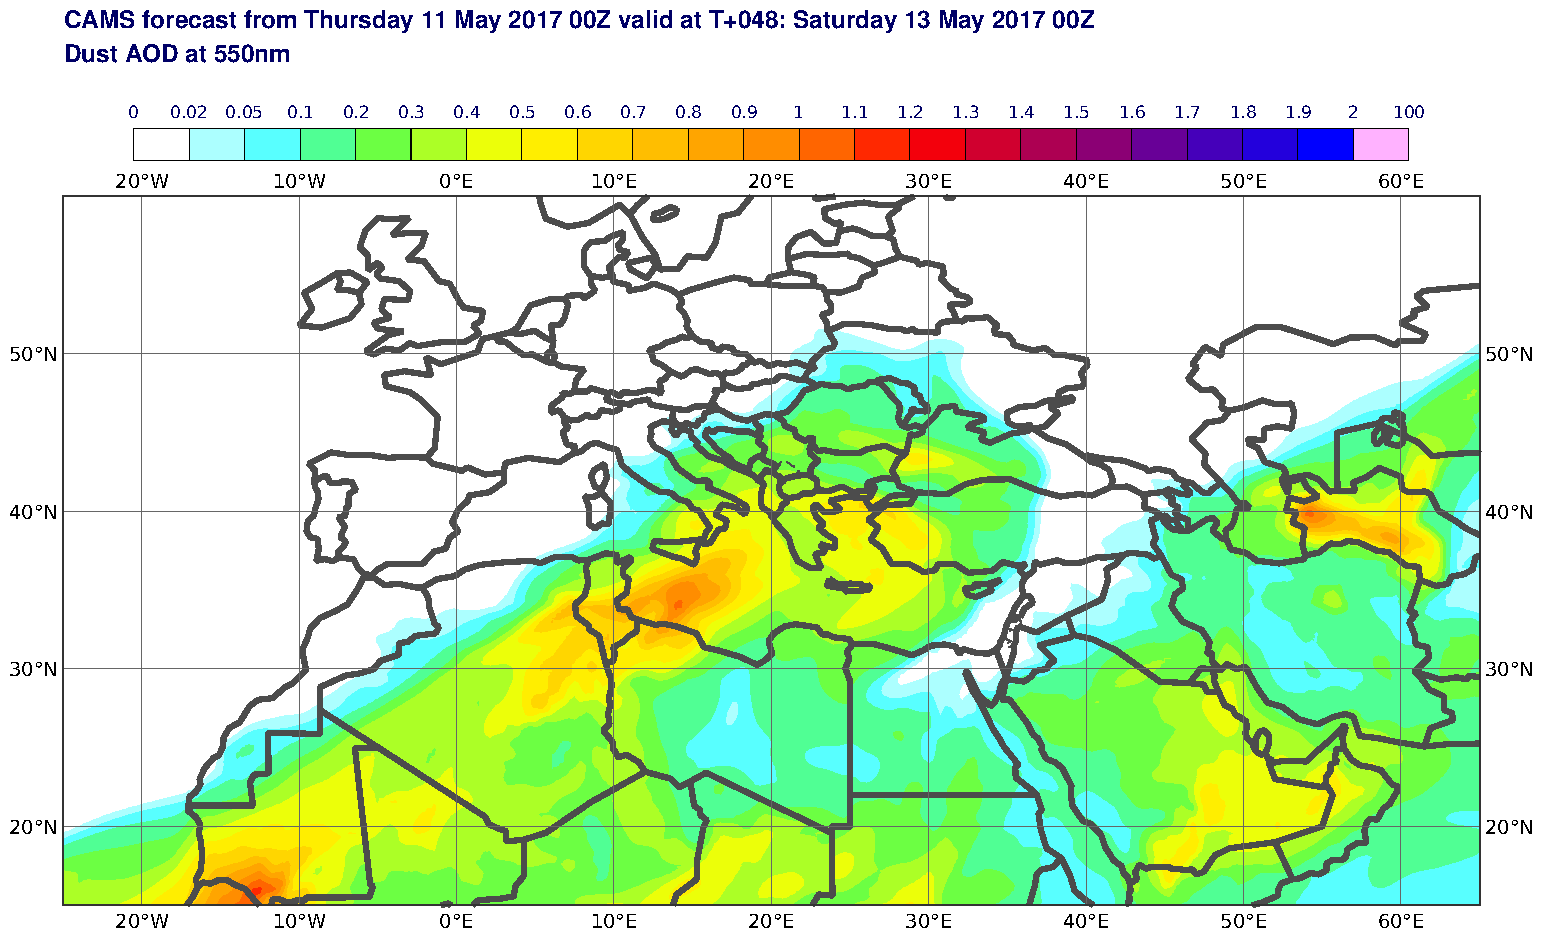 Dust AOD at 550nm valid at T48 - 2017-05-13 00:00